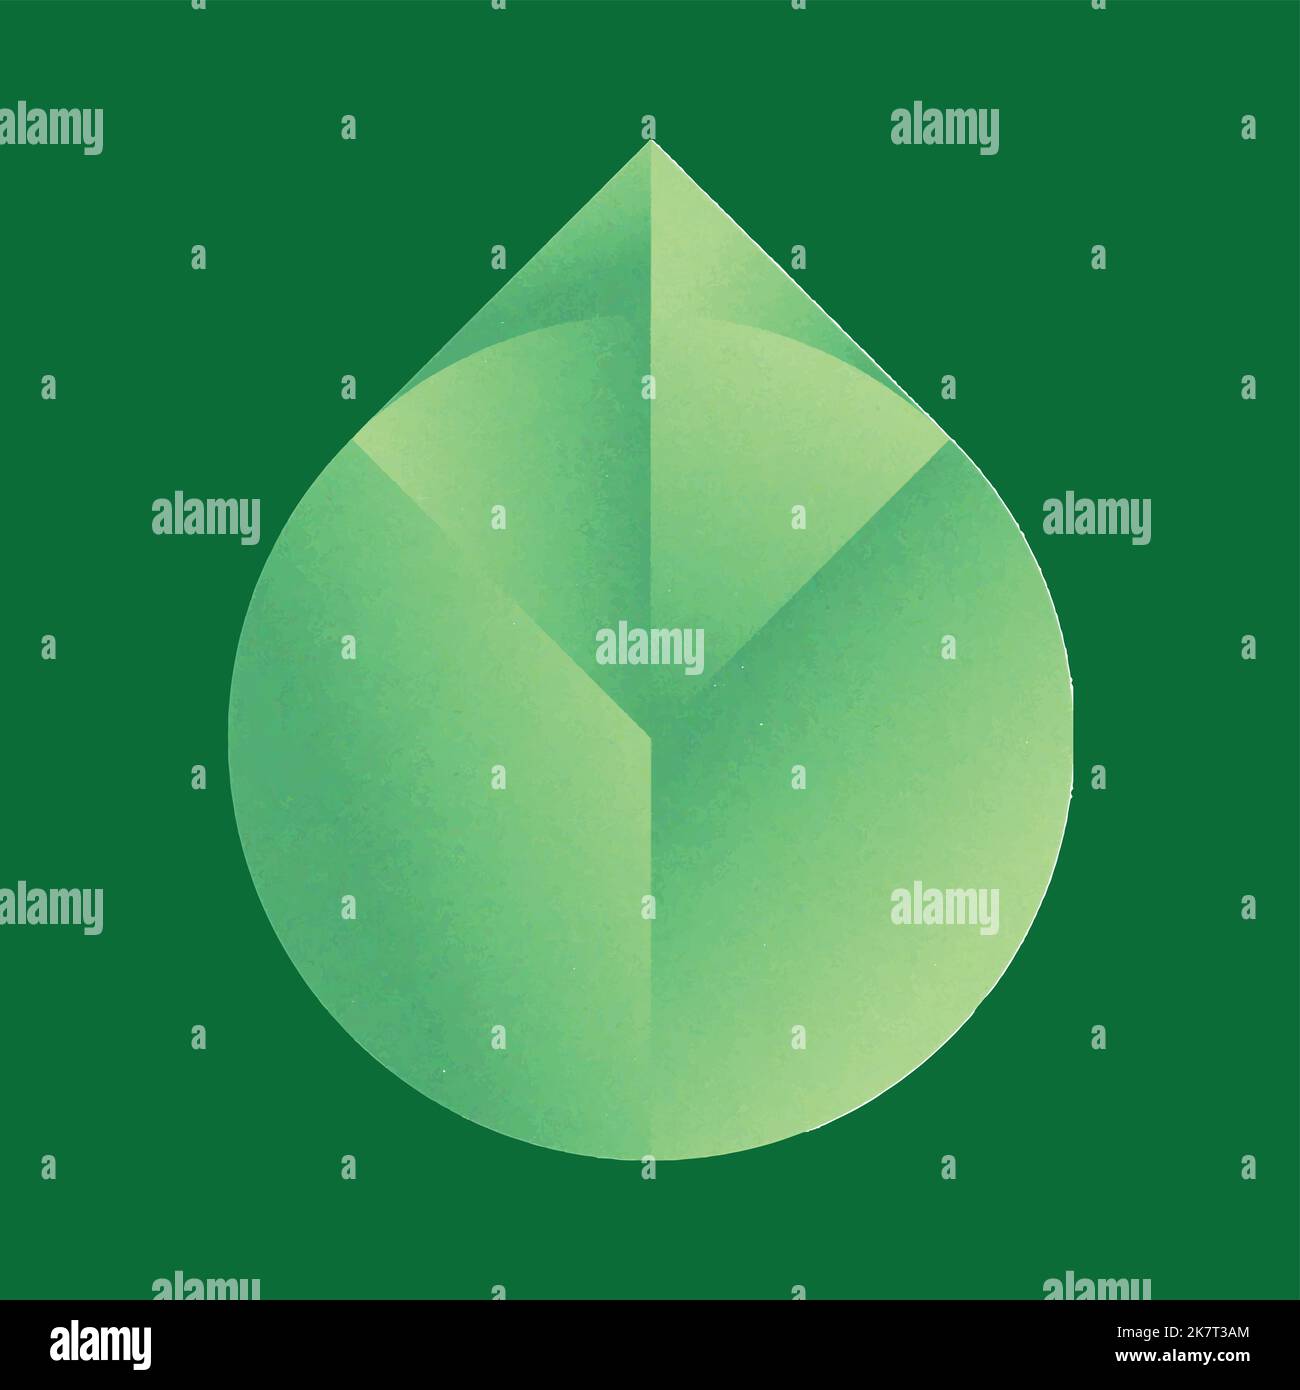 Leaf of a tree vector icon, minimal cartoon style. Stock Vector